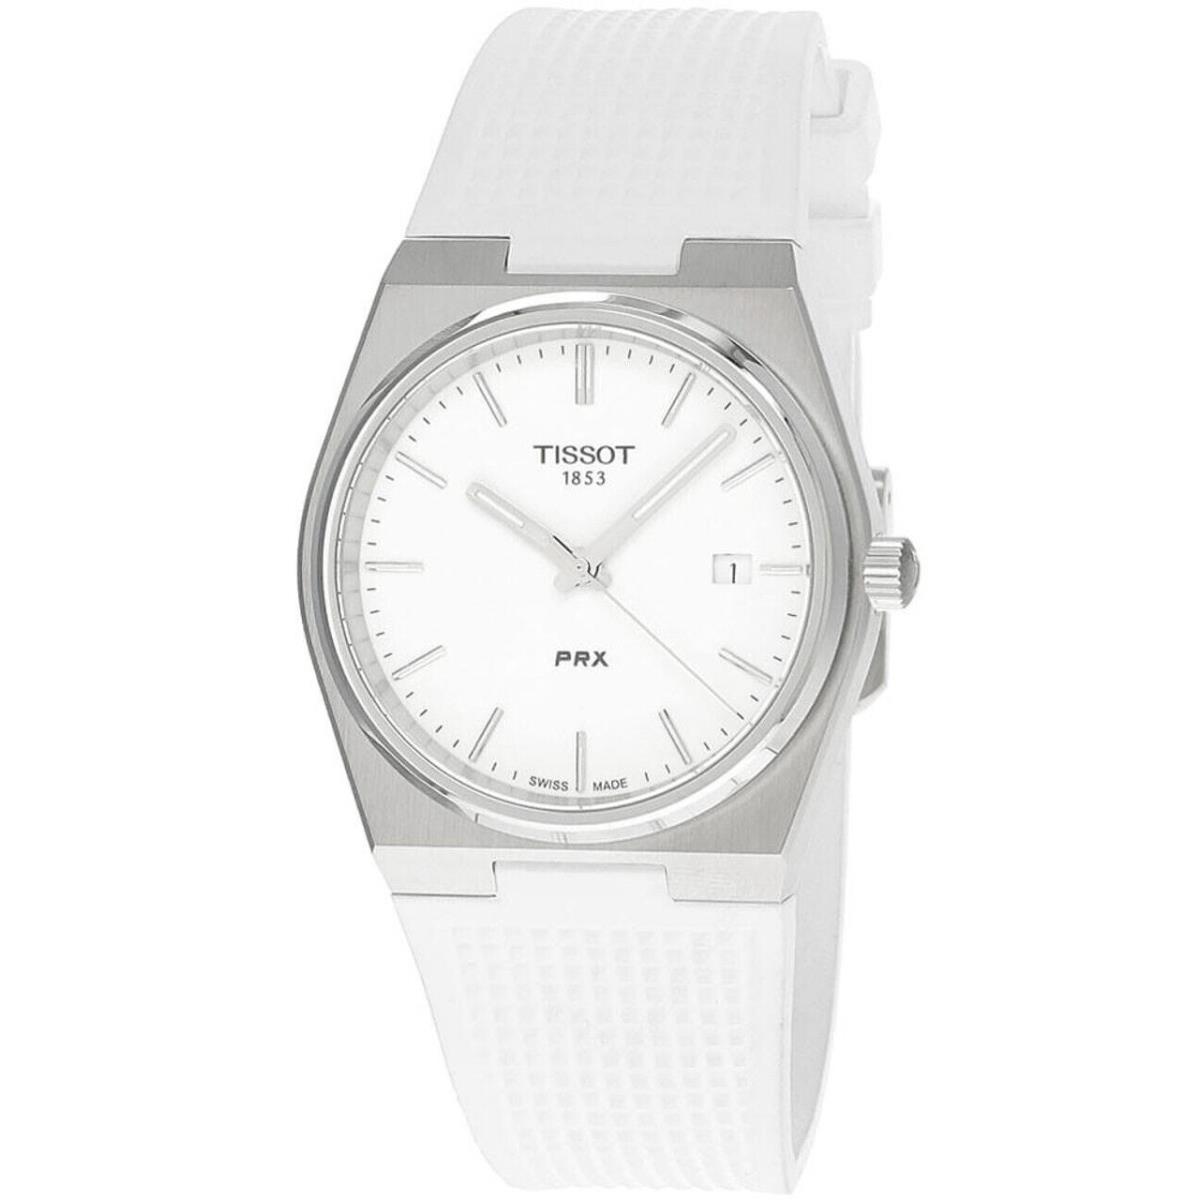 Tissot Prx 40MM Quartz White Dial Rubber Men`s Watch T137.410.17.011.00 - Dial: White/Fully Luminous Dial, Band: Silver, Bezel: Silver